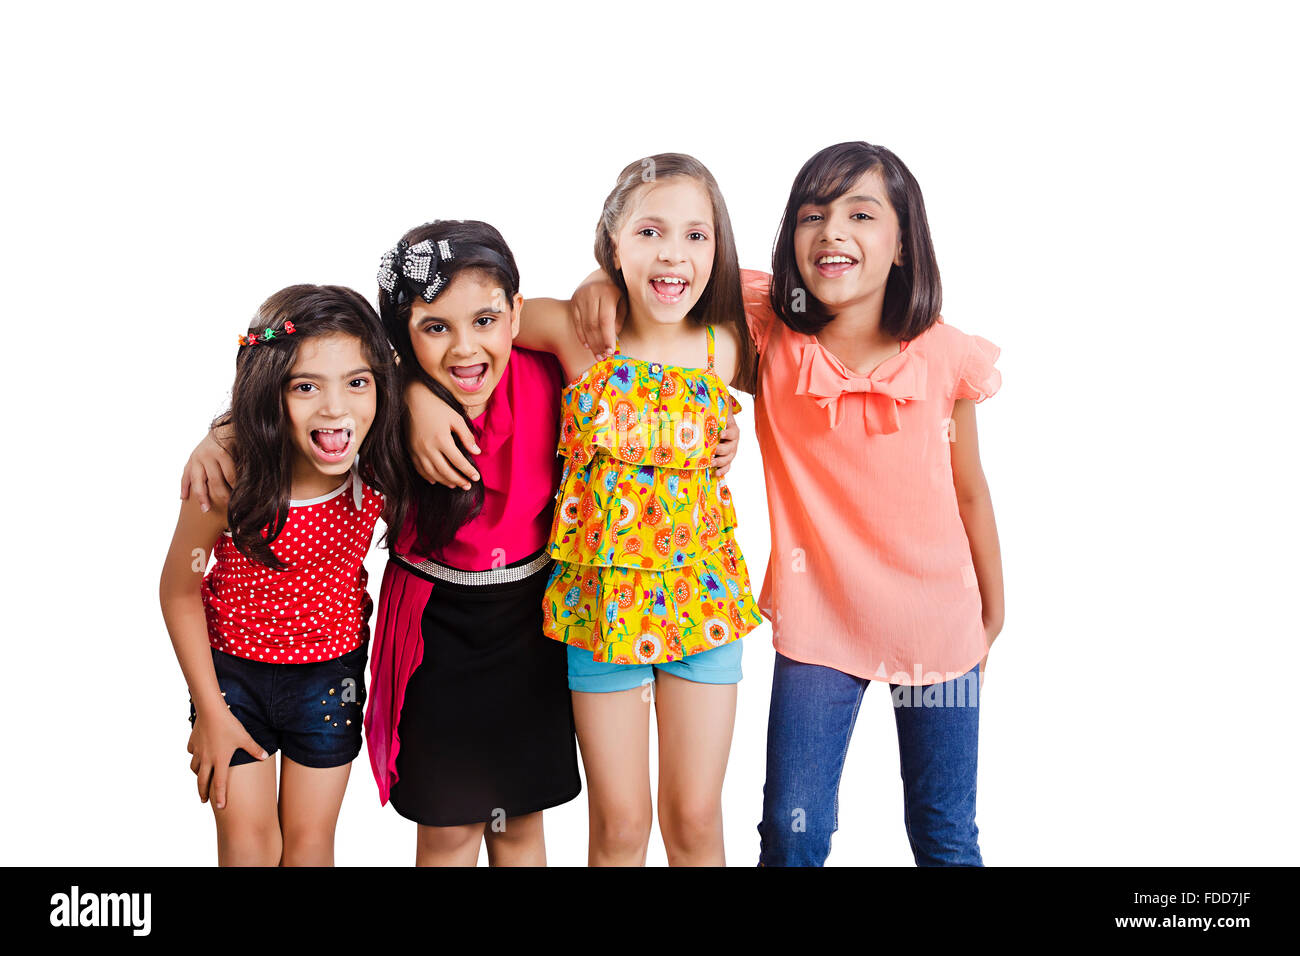 4 Kids Girls Friends Arms around Standing Shouting Fun Stock Photo ...